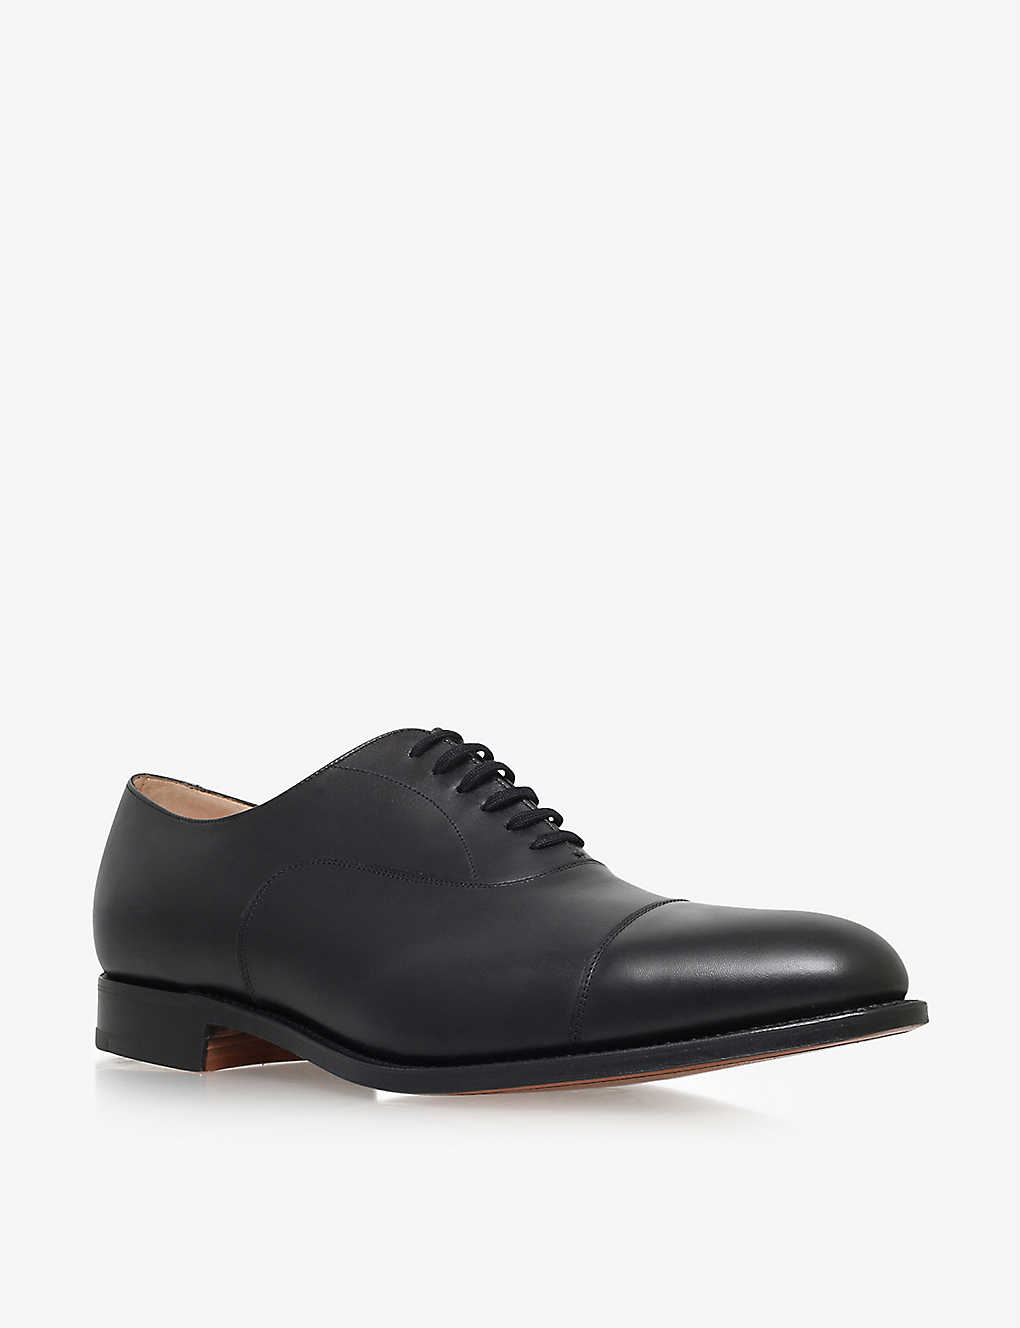 Shop Church Men's Black Dubai Oxford Shoes